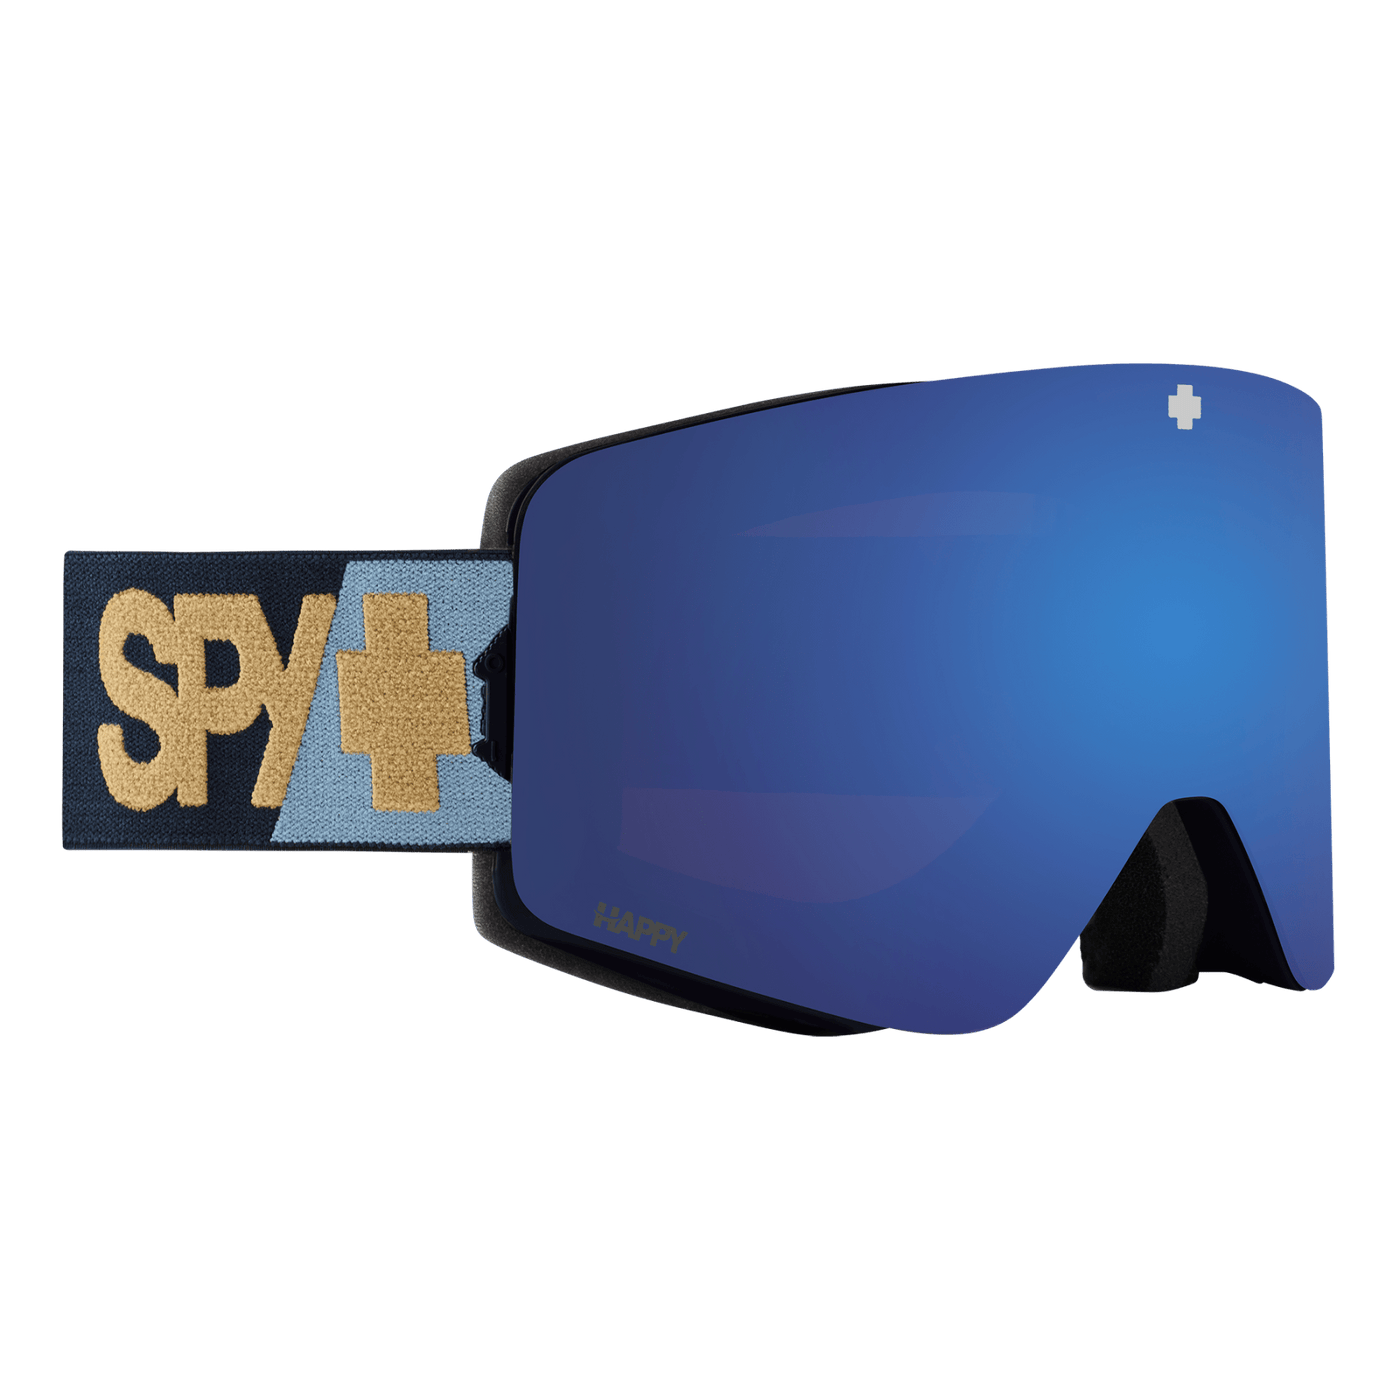 SPY Marauder Dark Blue Snow Goggles 8Lines Shop - Fast Shipping